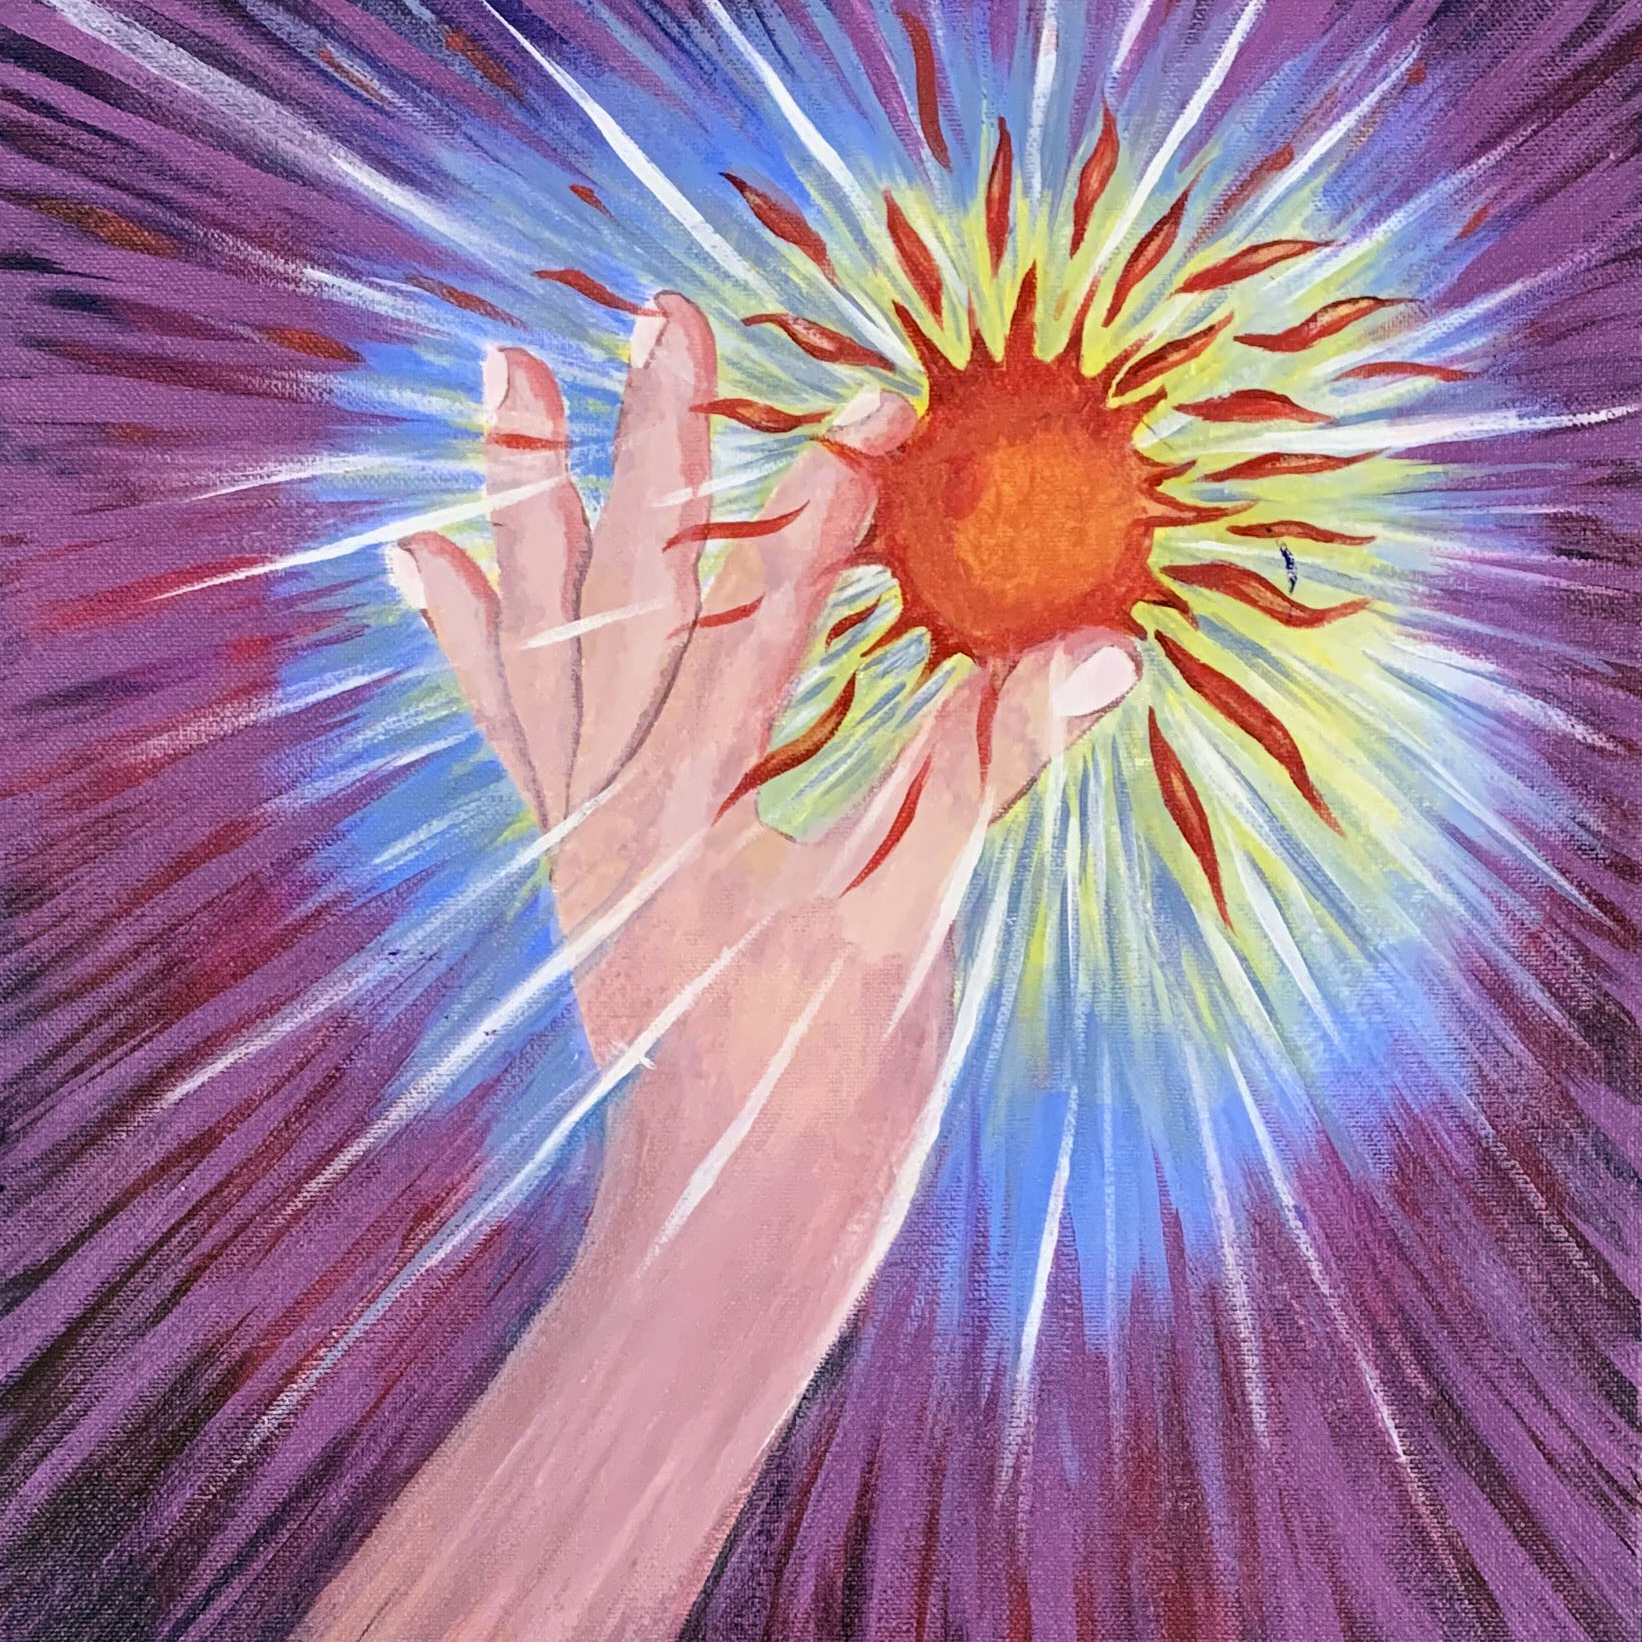 Hand holding sun visual art by Ruben Radillo